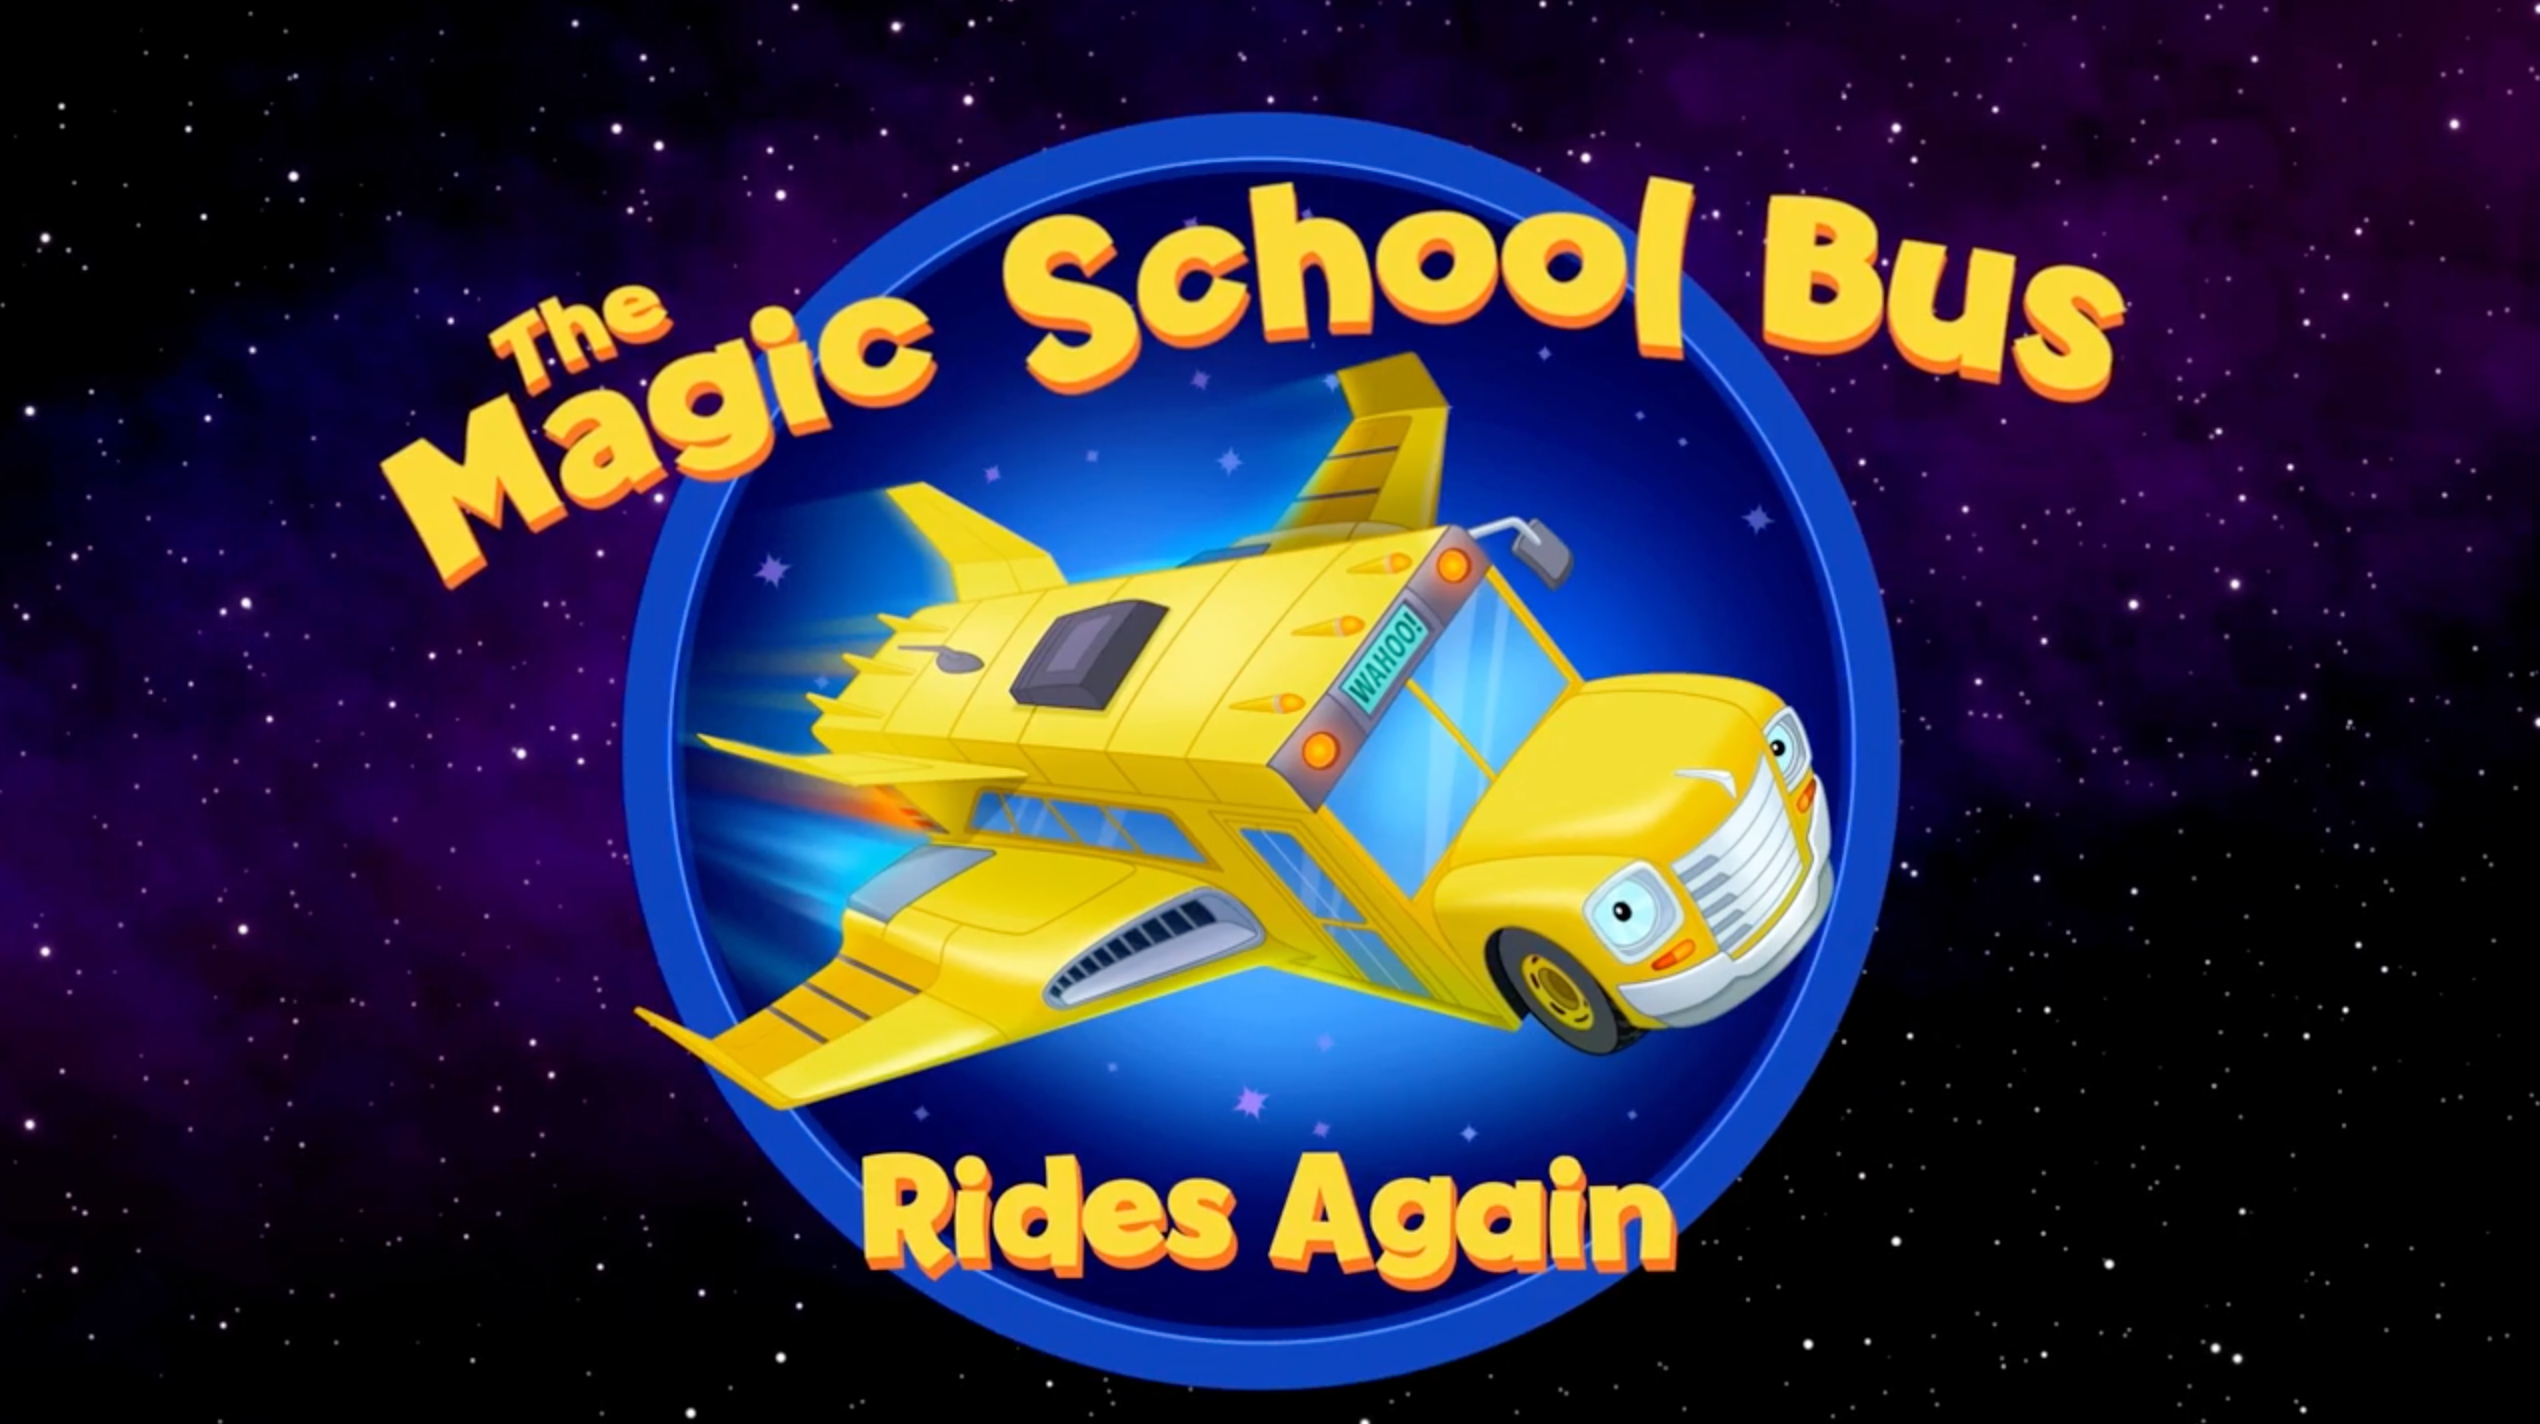 The Magic School Bus Rides Again Netflix revival wasn’t that great Season 1 & 2